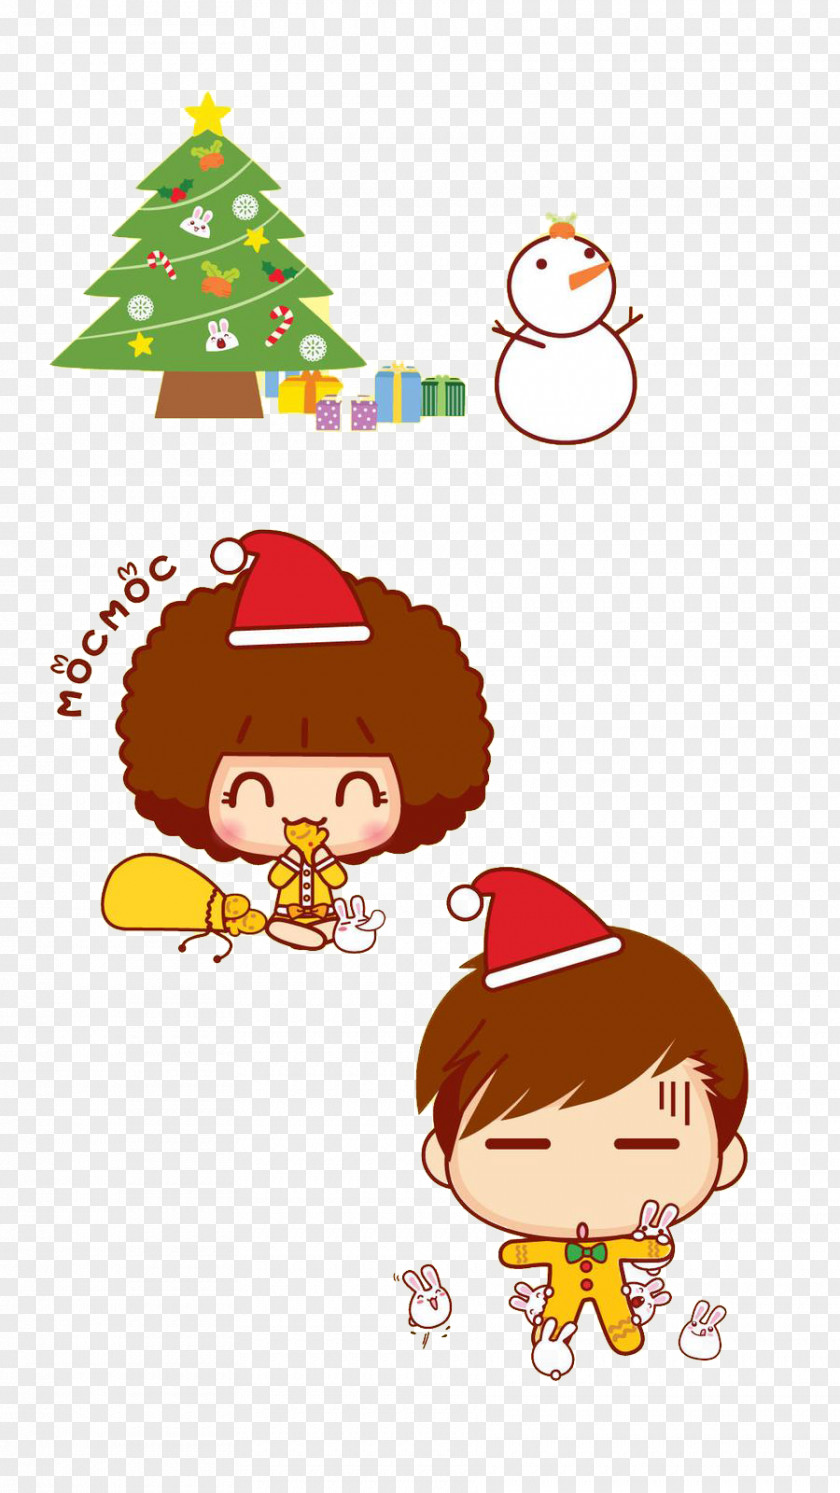 Snowman Poster Desktop Wallpaper Christmas Ornament Santa Claus Cartoon PNG